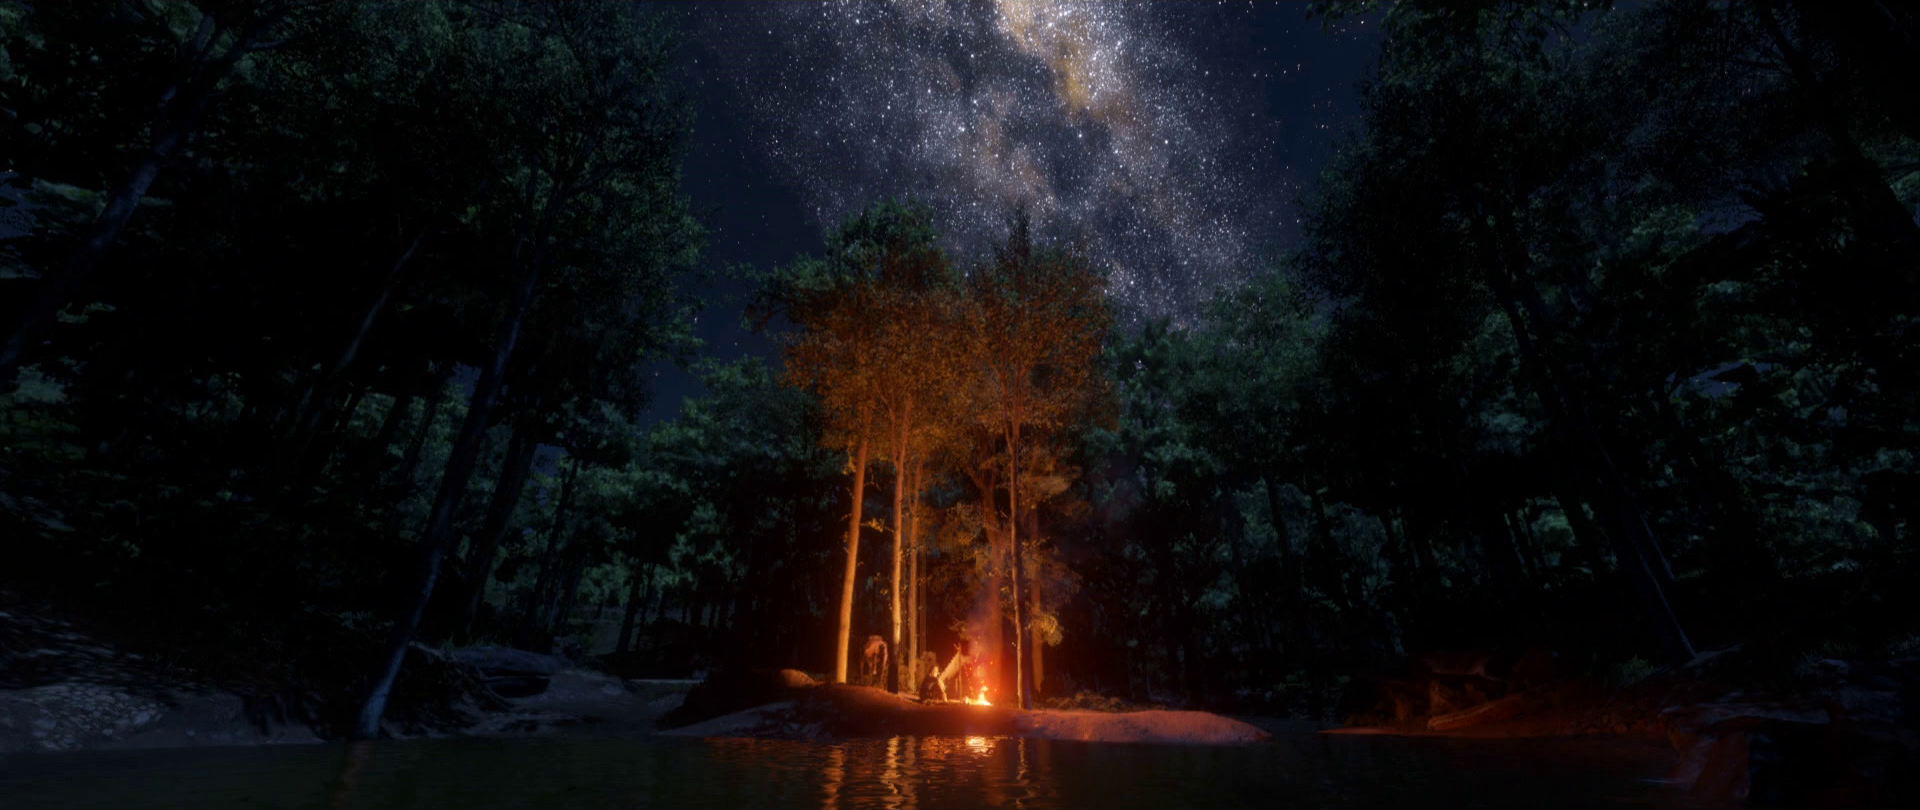 General 1920x810 Rockstar Games Red Dead Redemption 2 forest screen shot star trails night sky campfire stars Red Dead Redemption